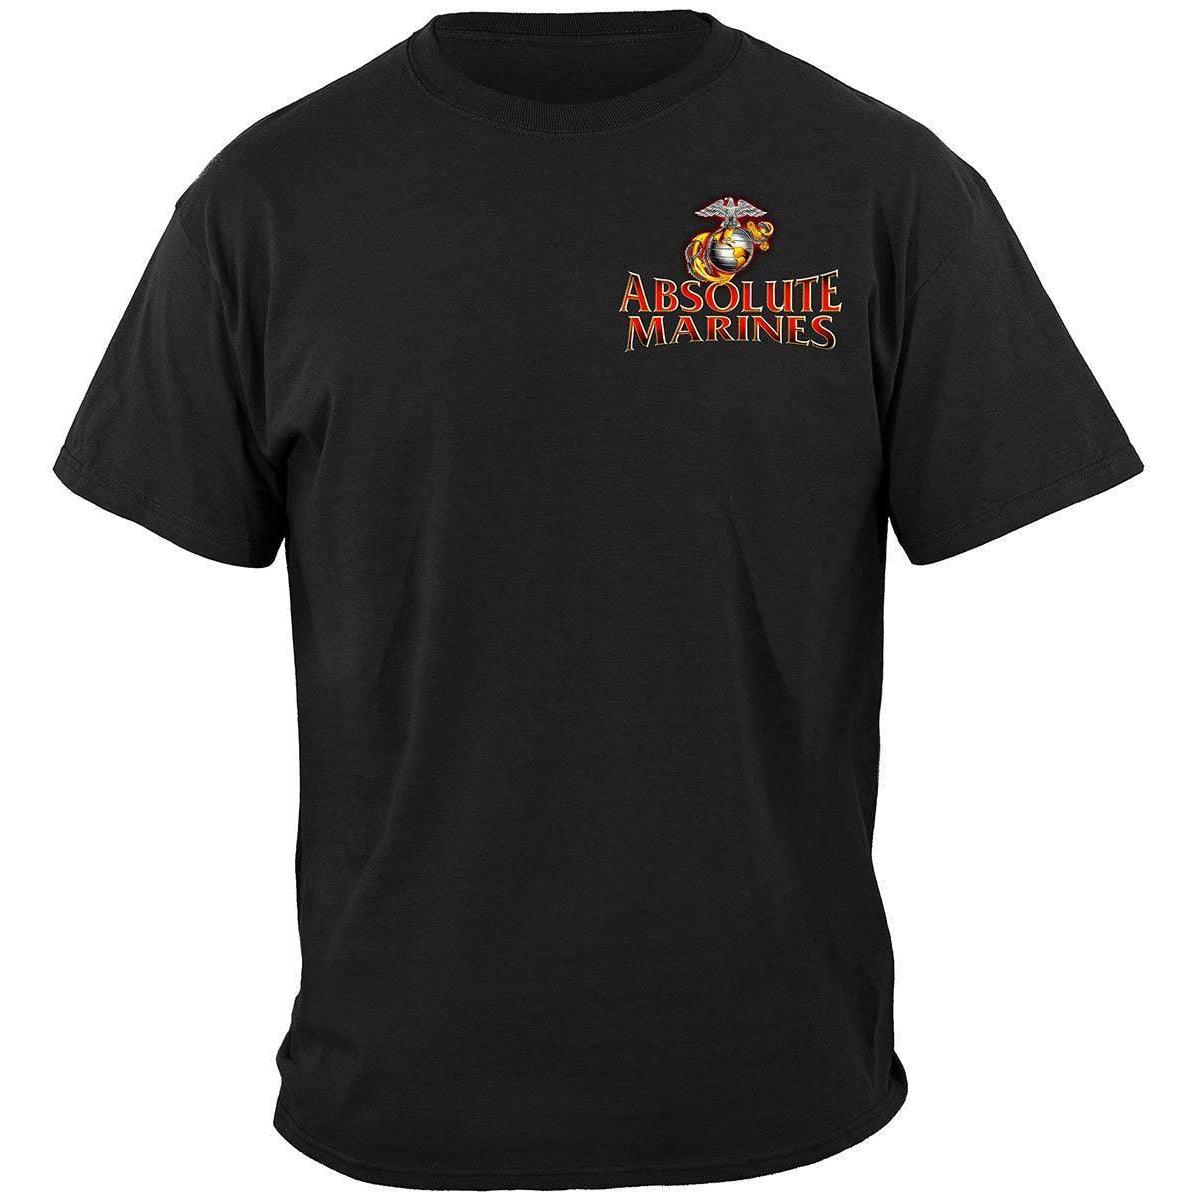 Absolute Marine Corps Premium T-Shirt - Military Republic